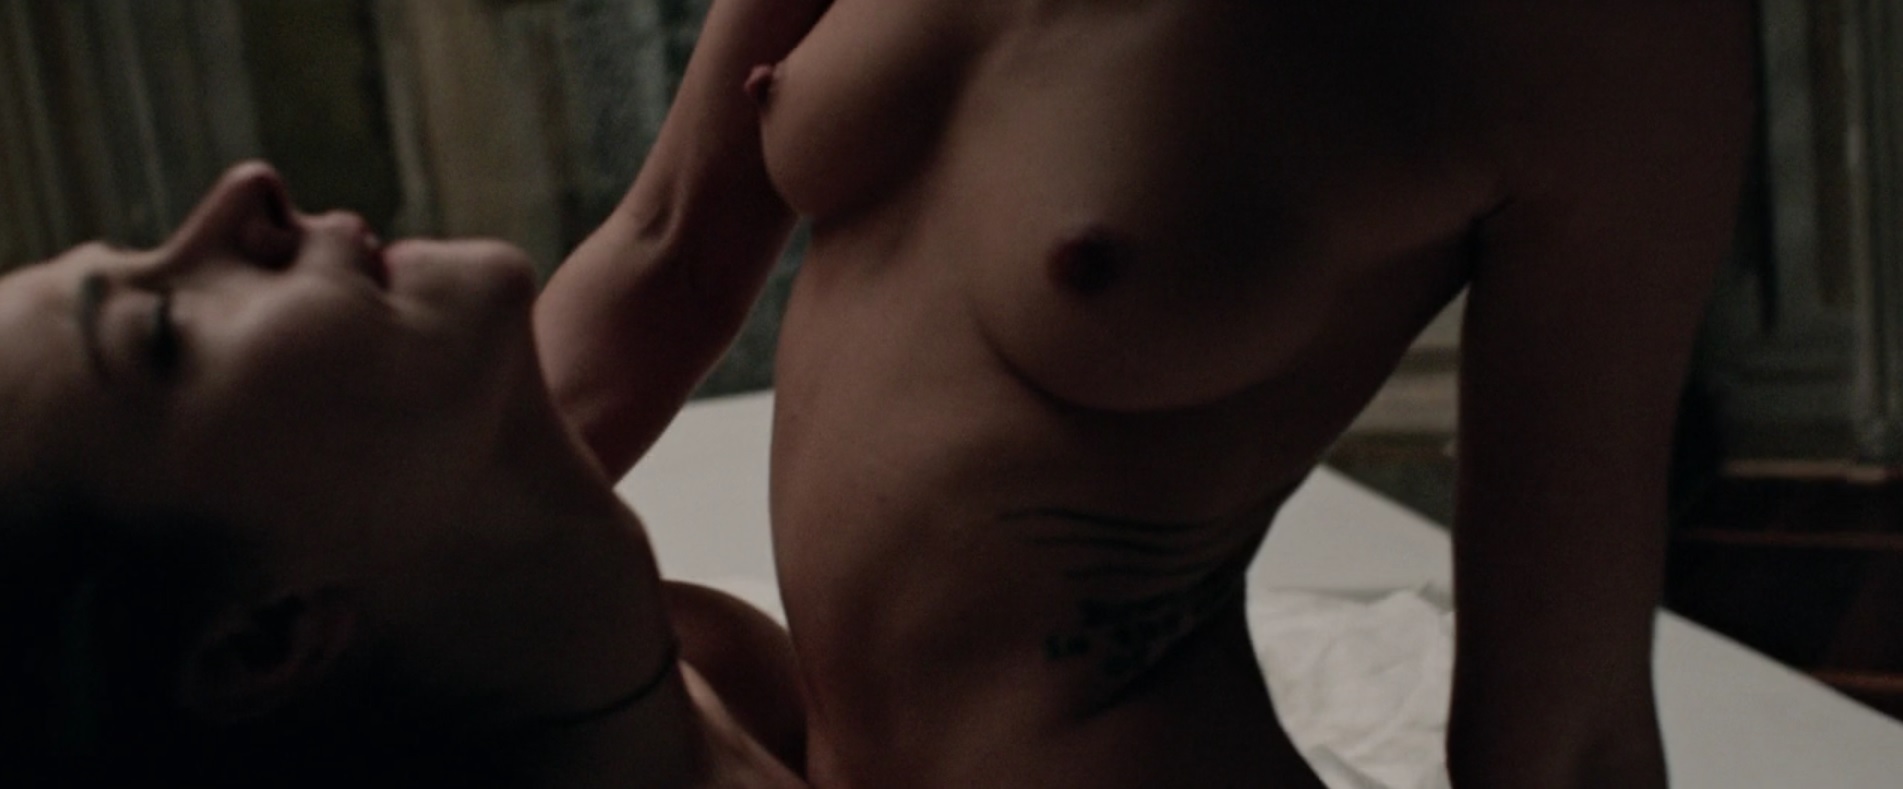 Analeigh Tipton nude pics.